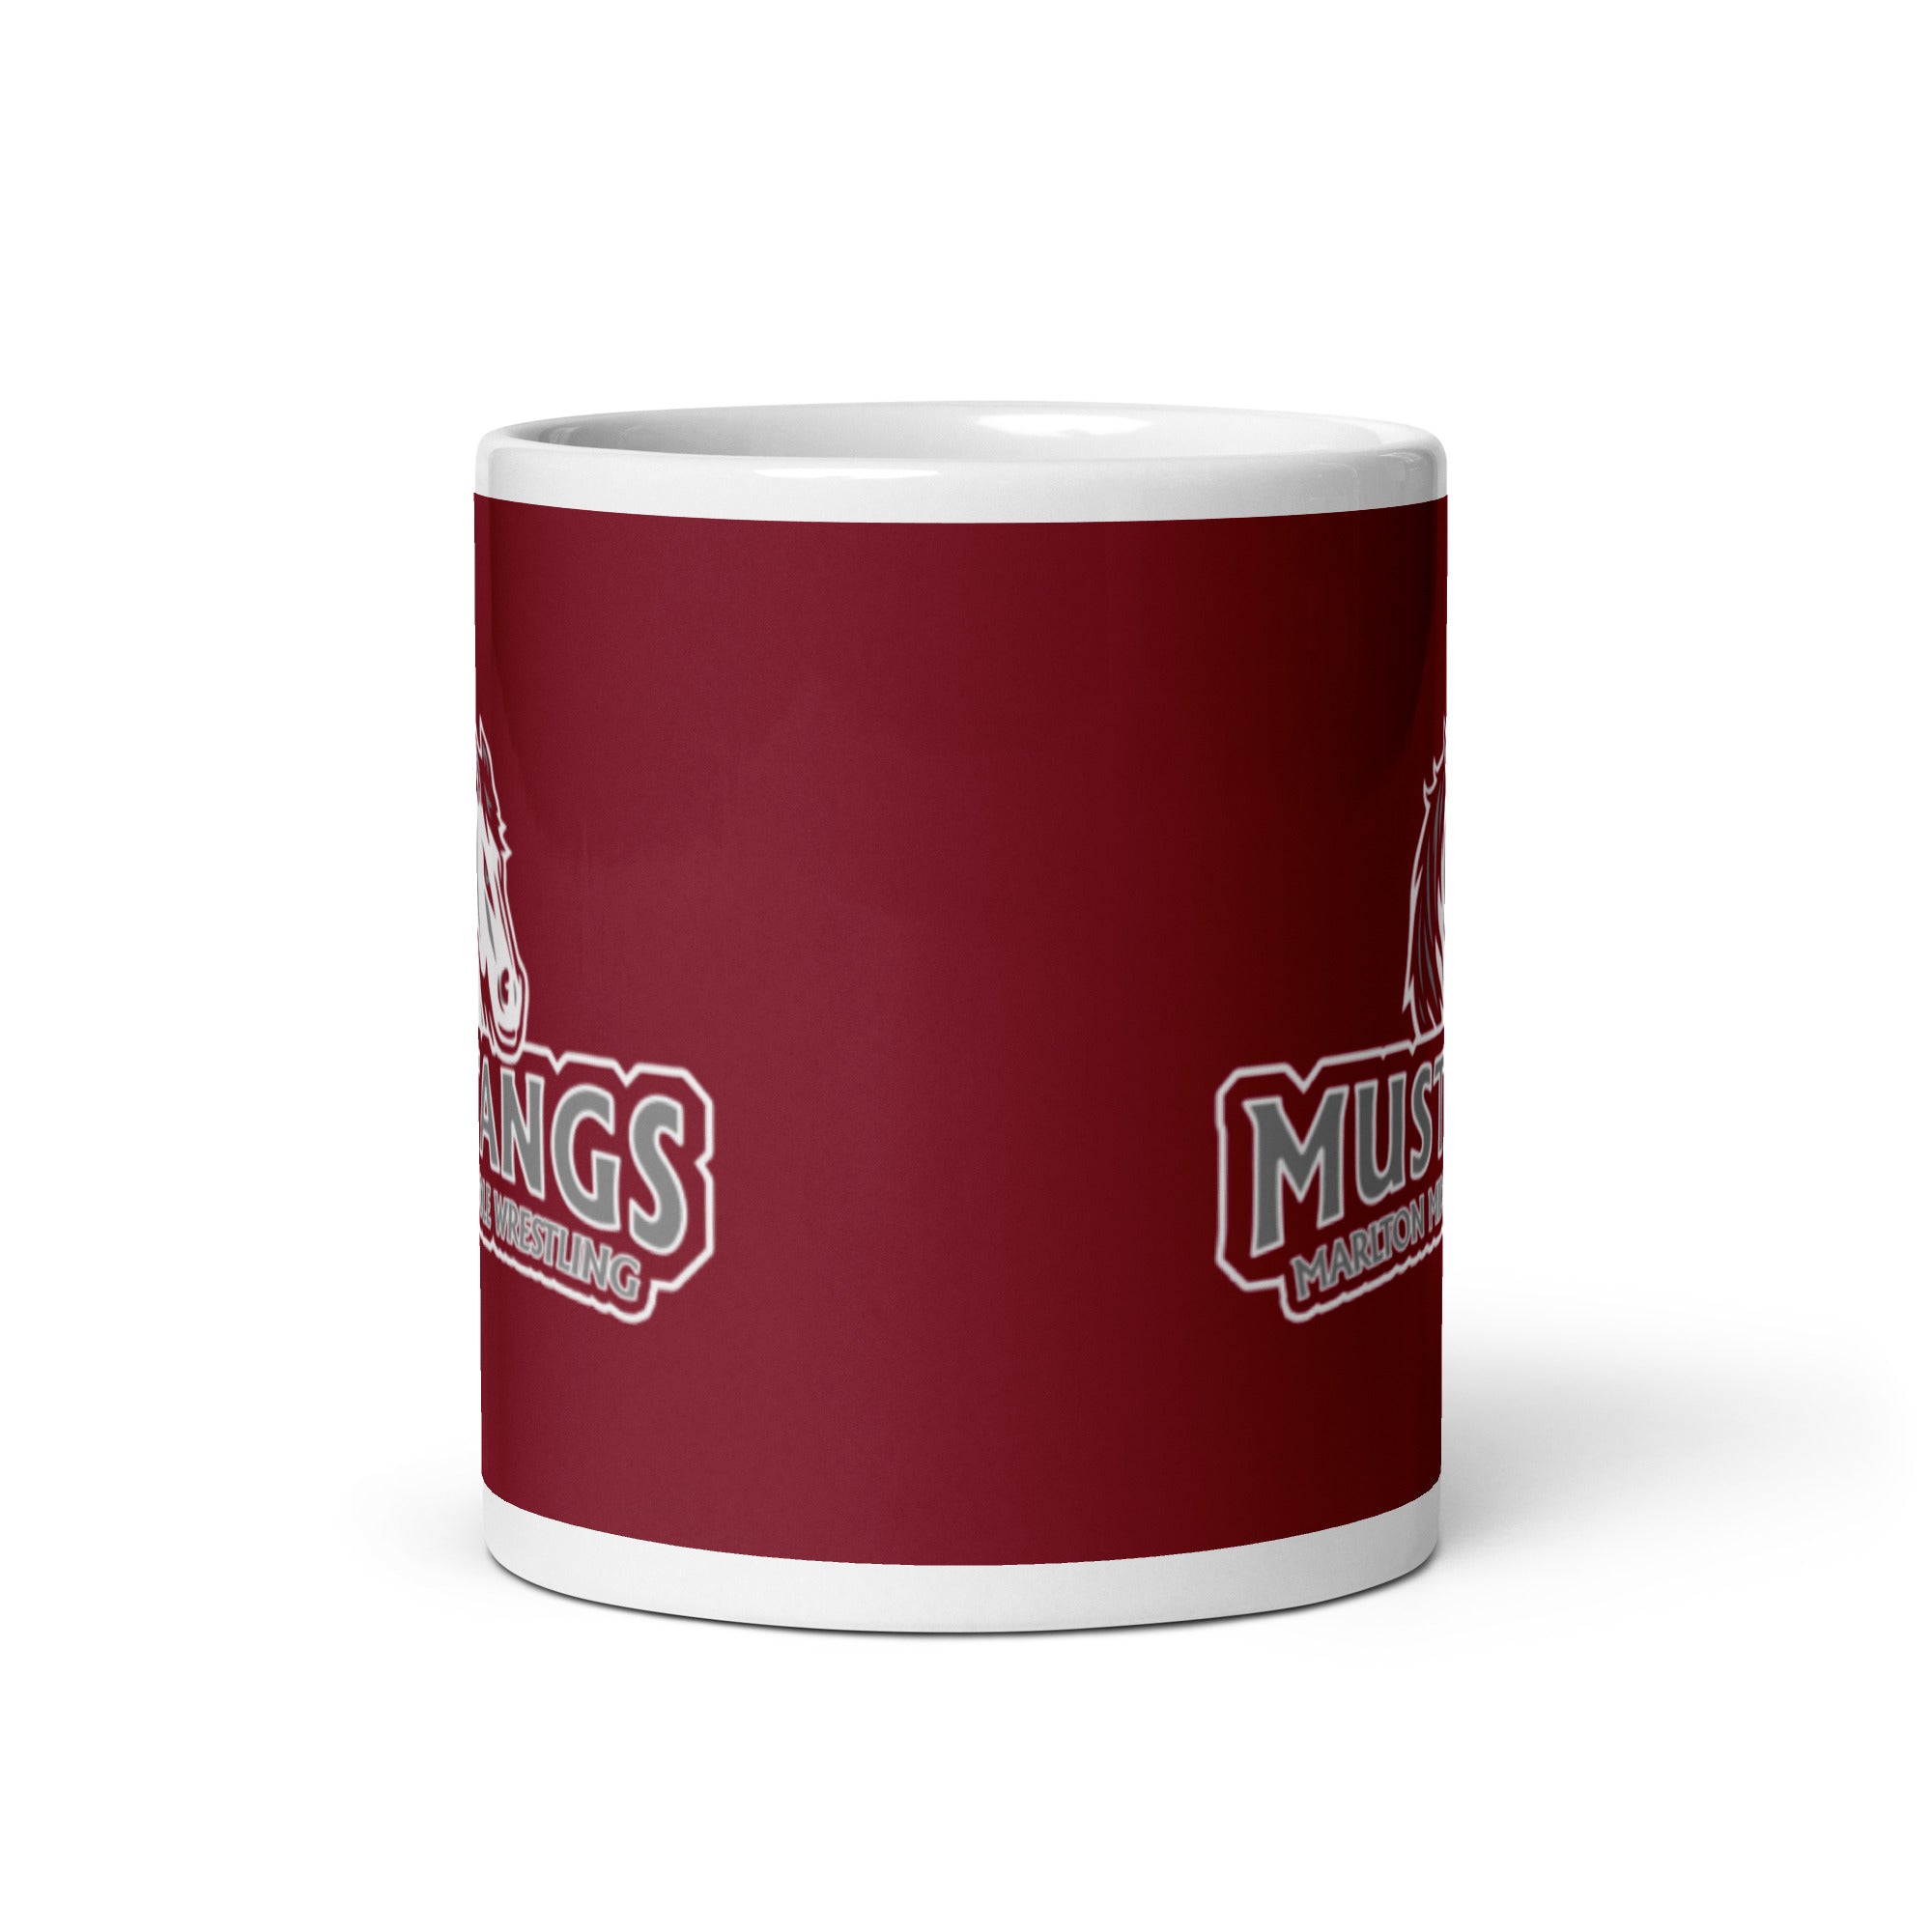 MMSW White glossy mug